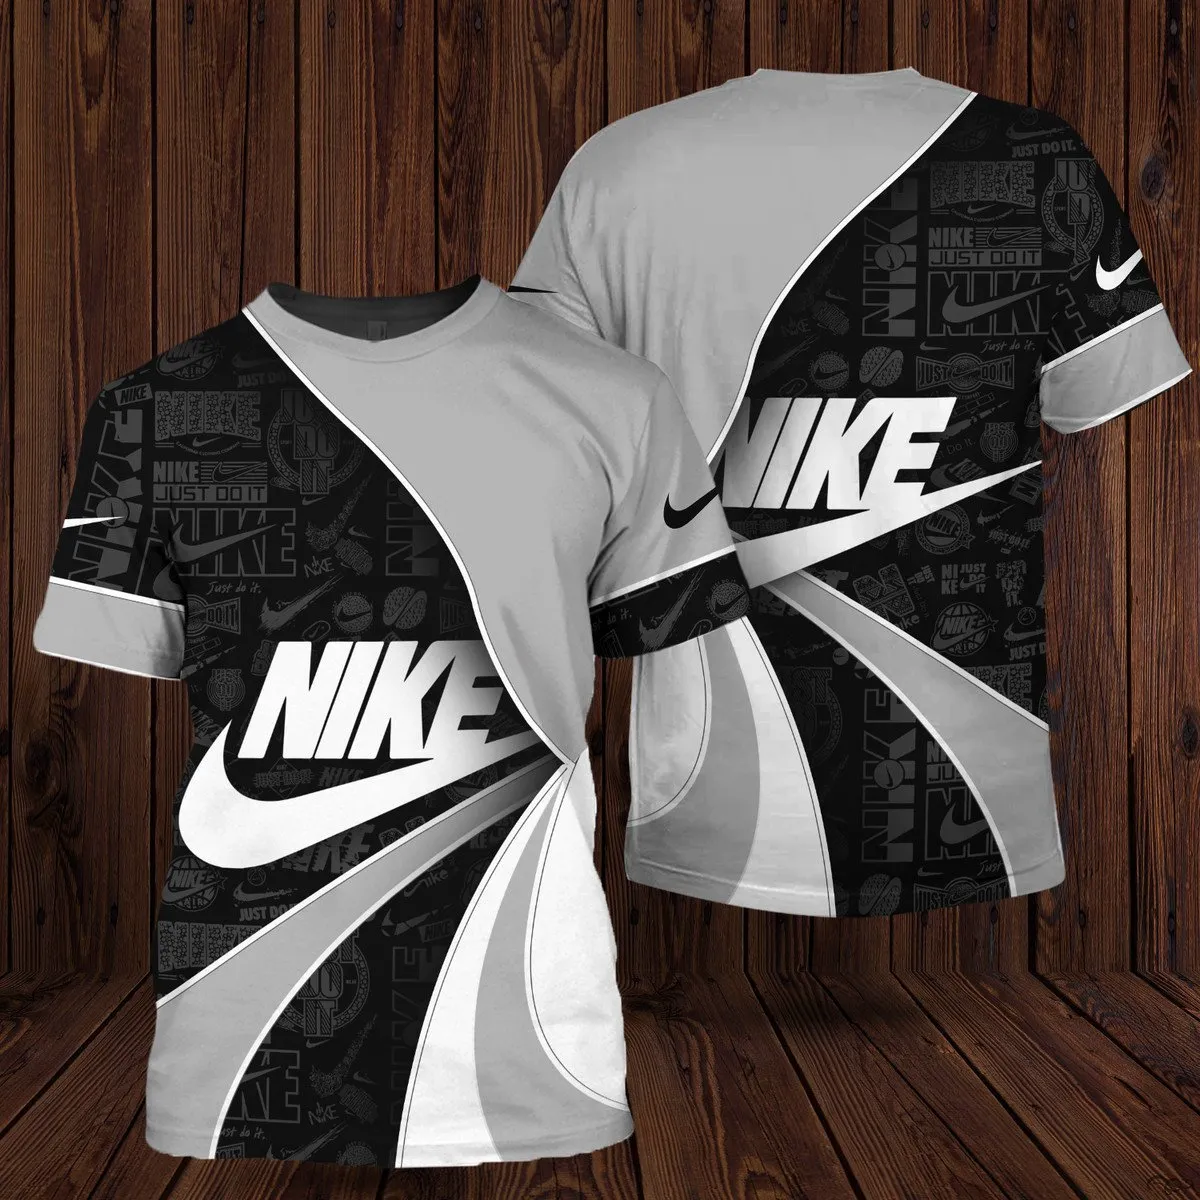 Nike Black Grey T Shirt Outfit Fashion Luxury